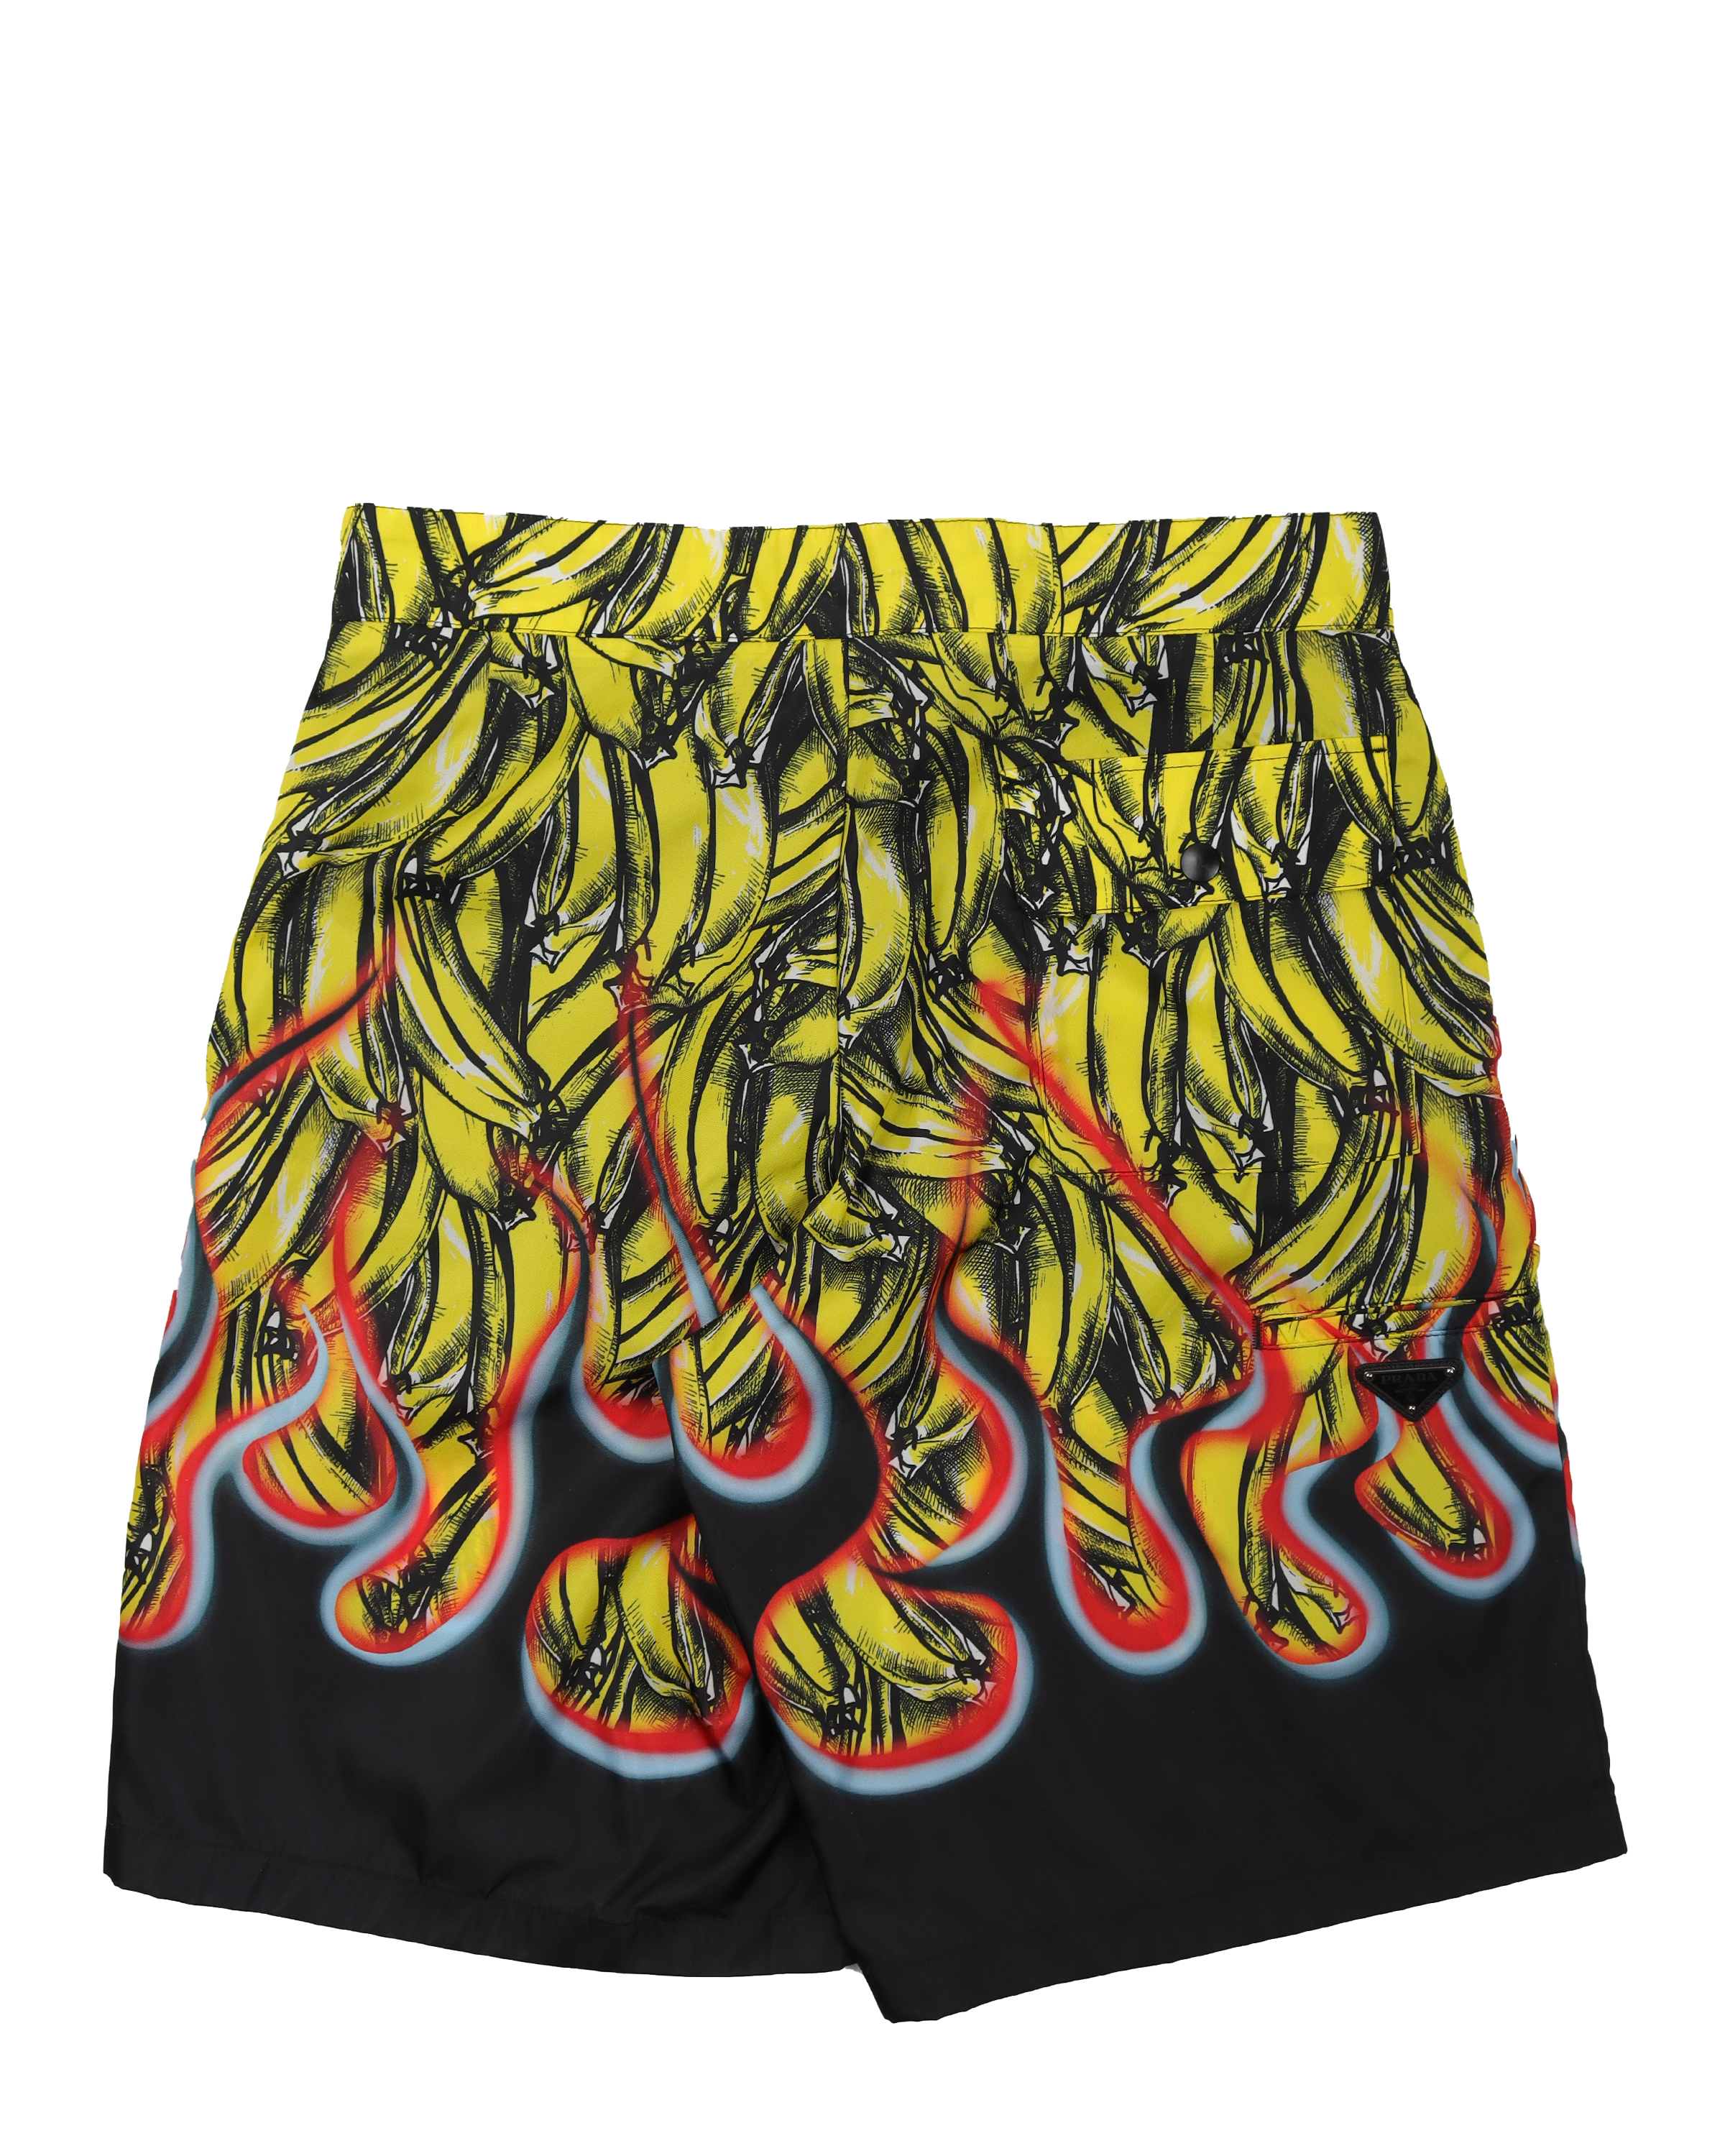 Banana & Flame-Printed Swim Trunks